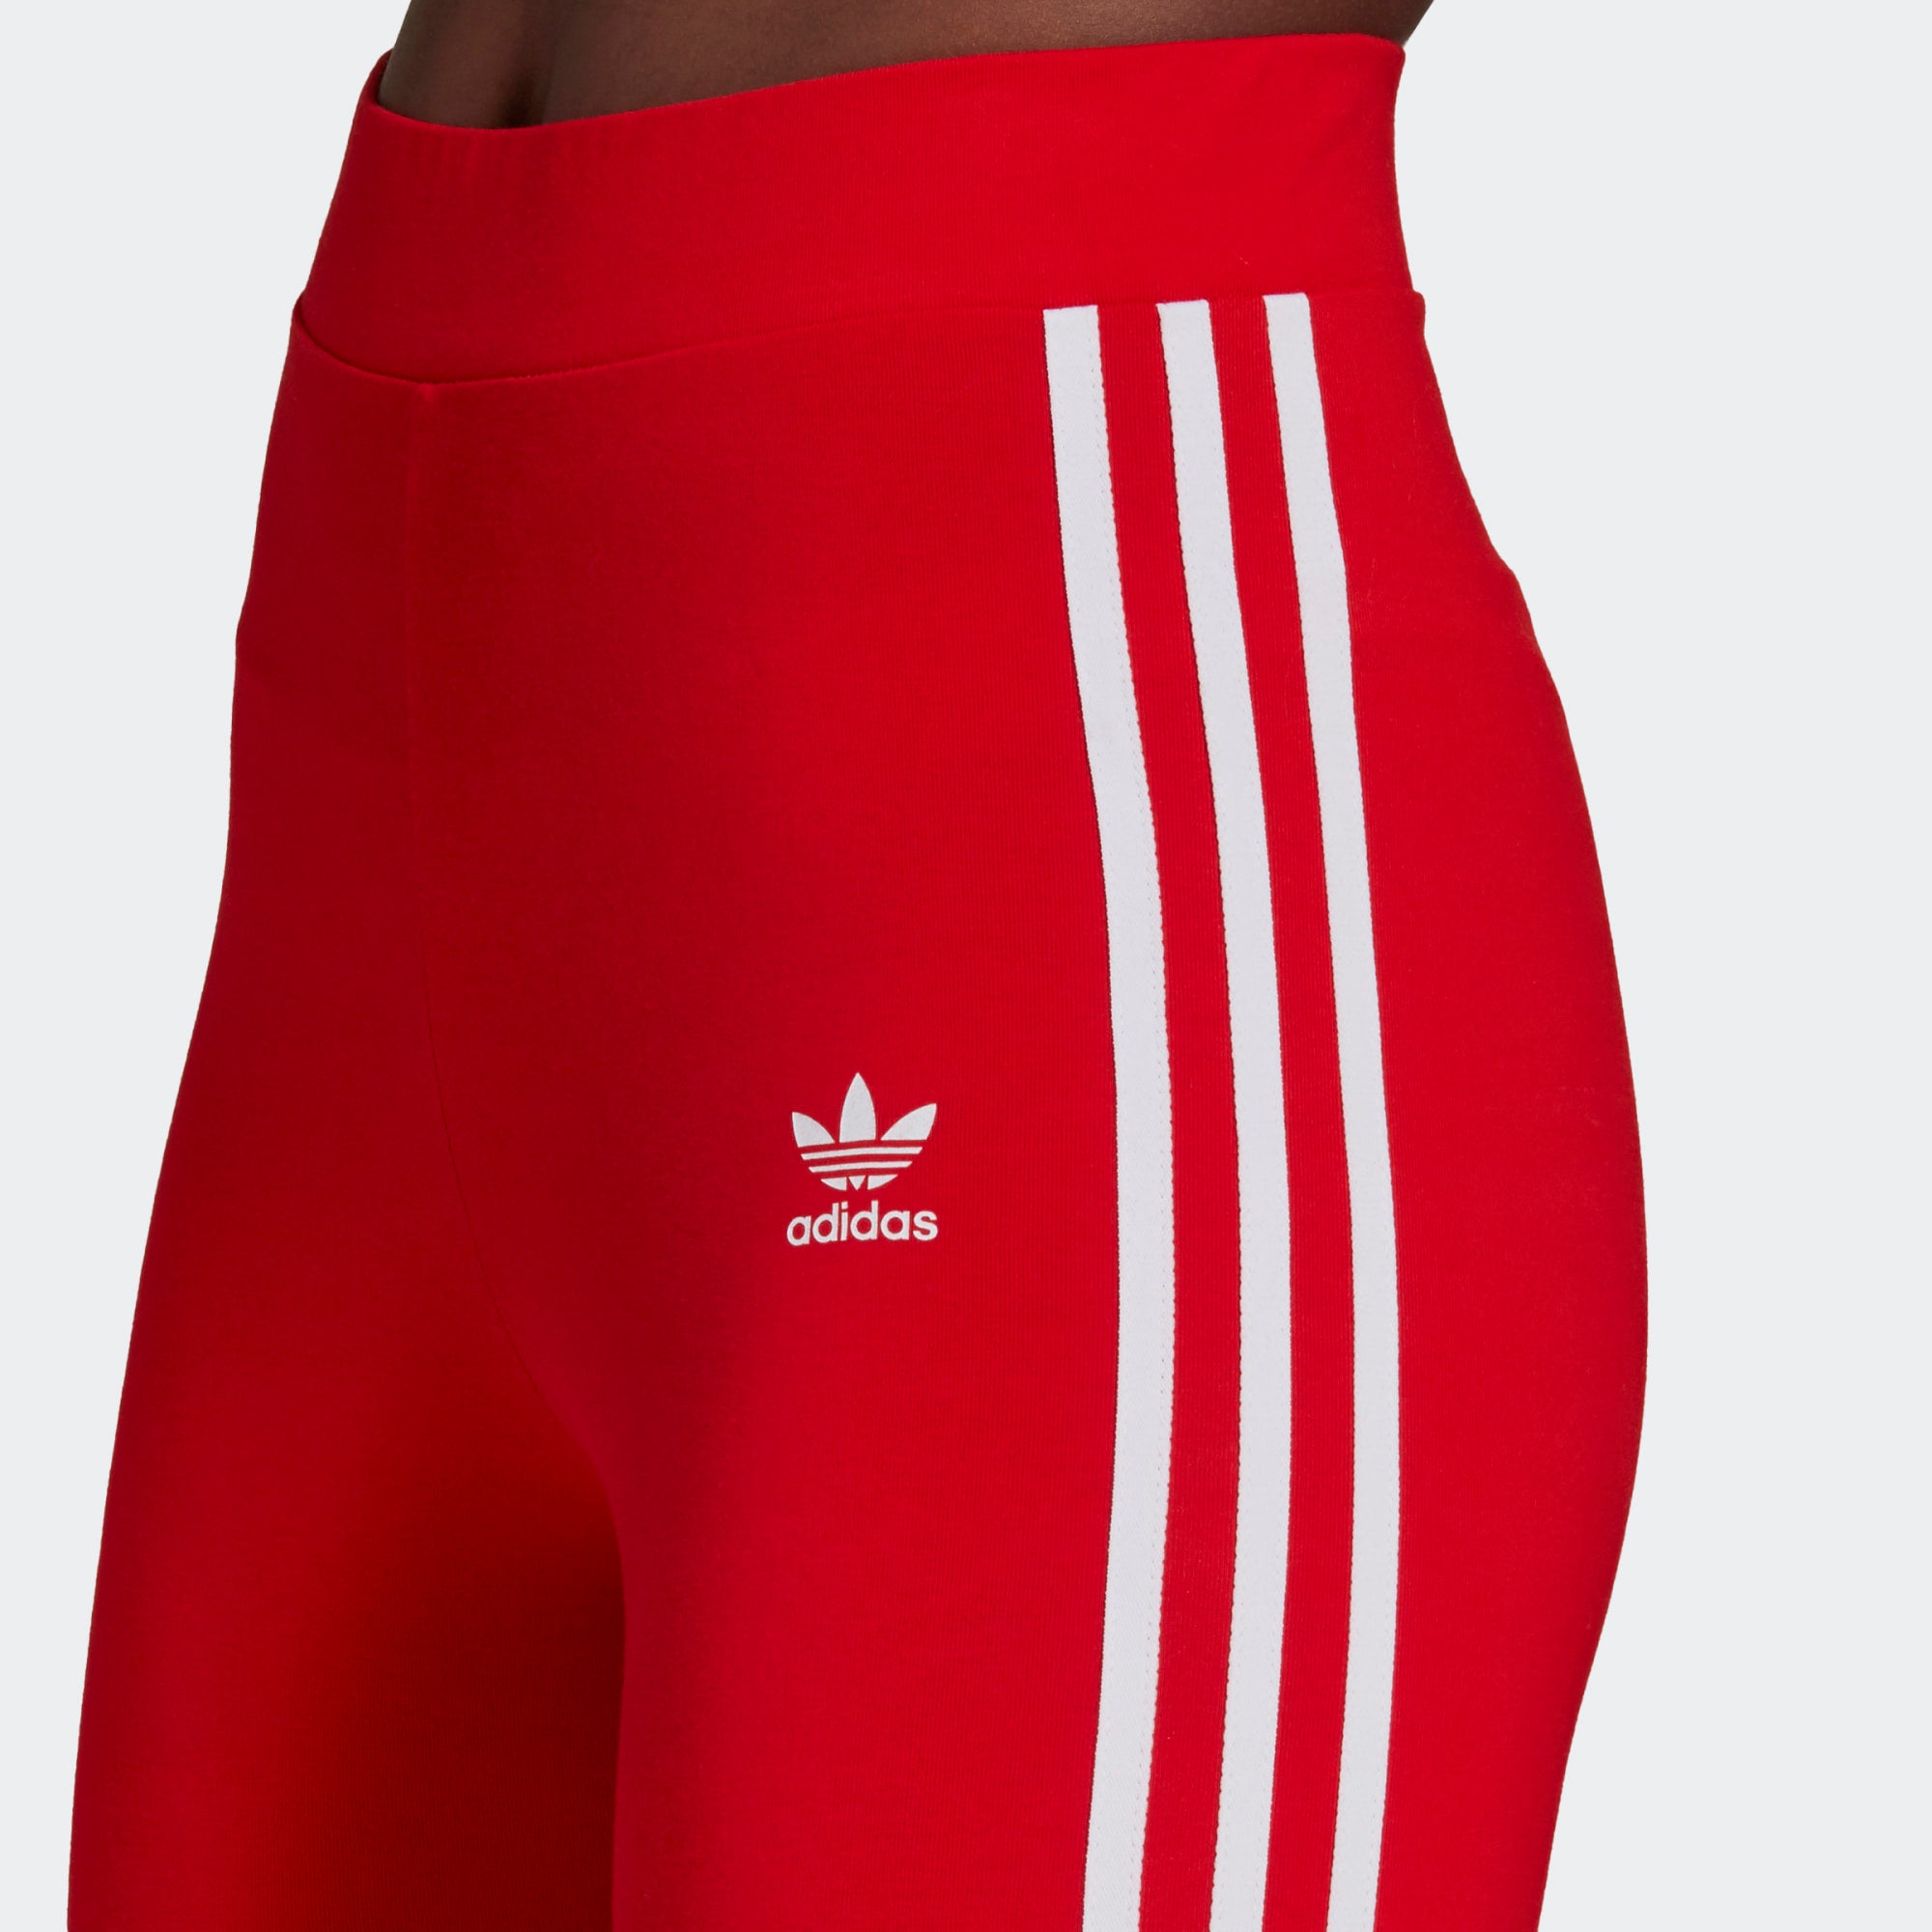 Adidas Women's 3 Stripes Leggings (Vivid Red/Team Real Magenta